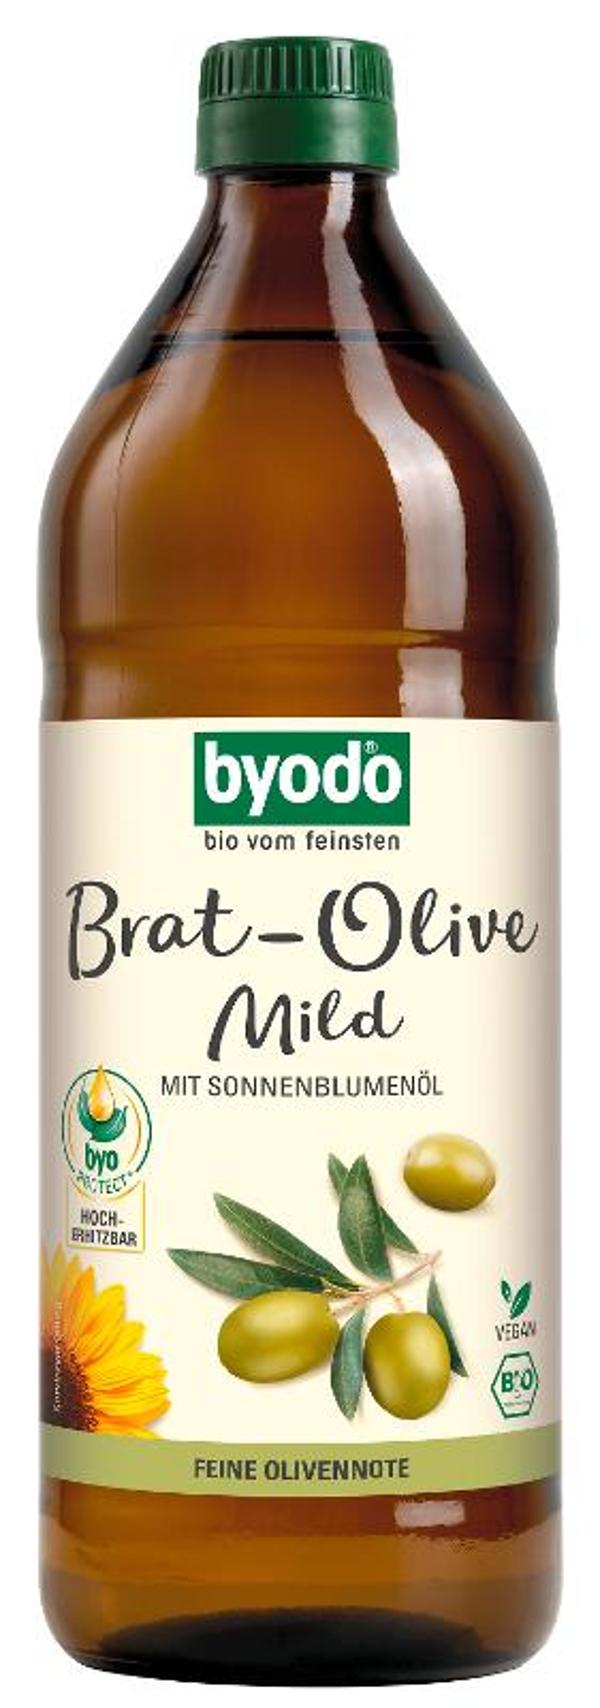 Produktfoto zu Bratöl Olive mild 750ml